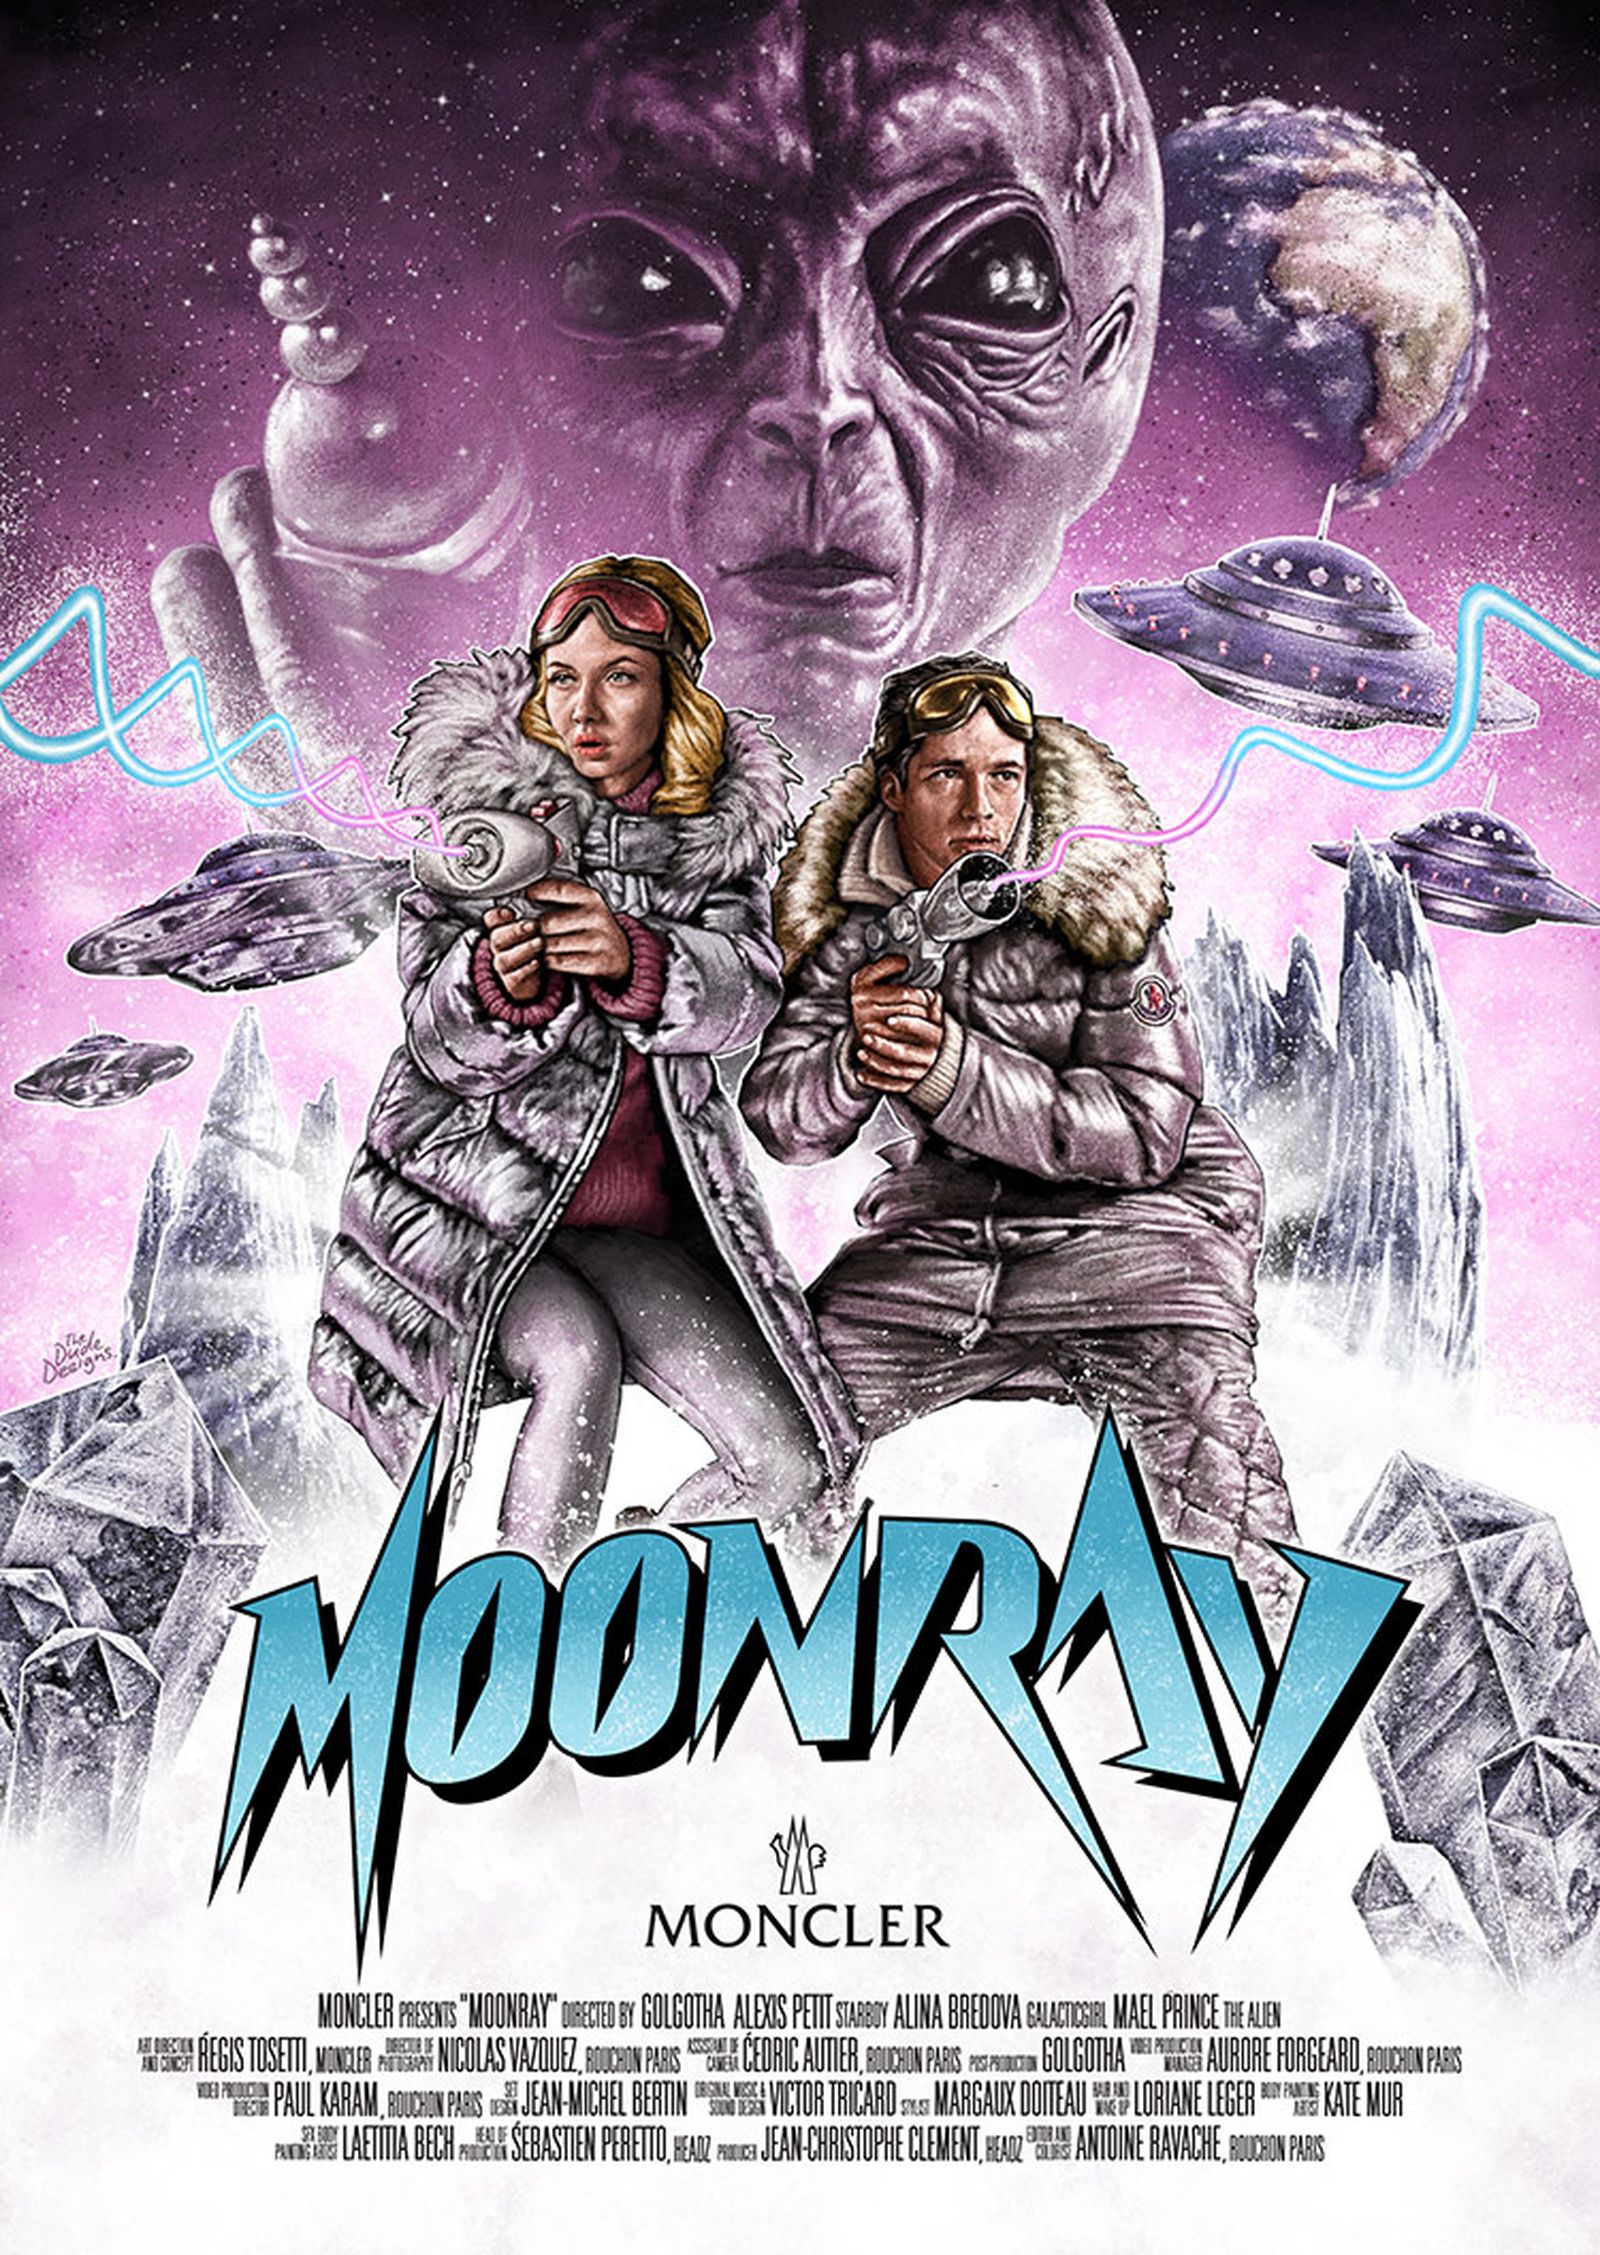 moncler-moonray-collection-short-film-01